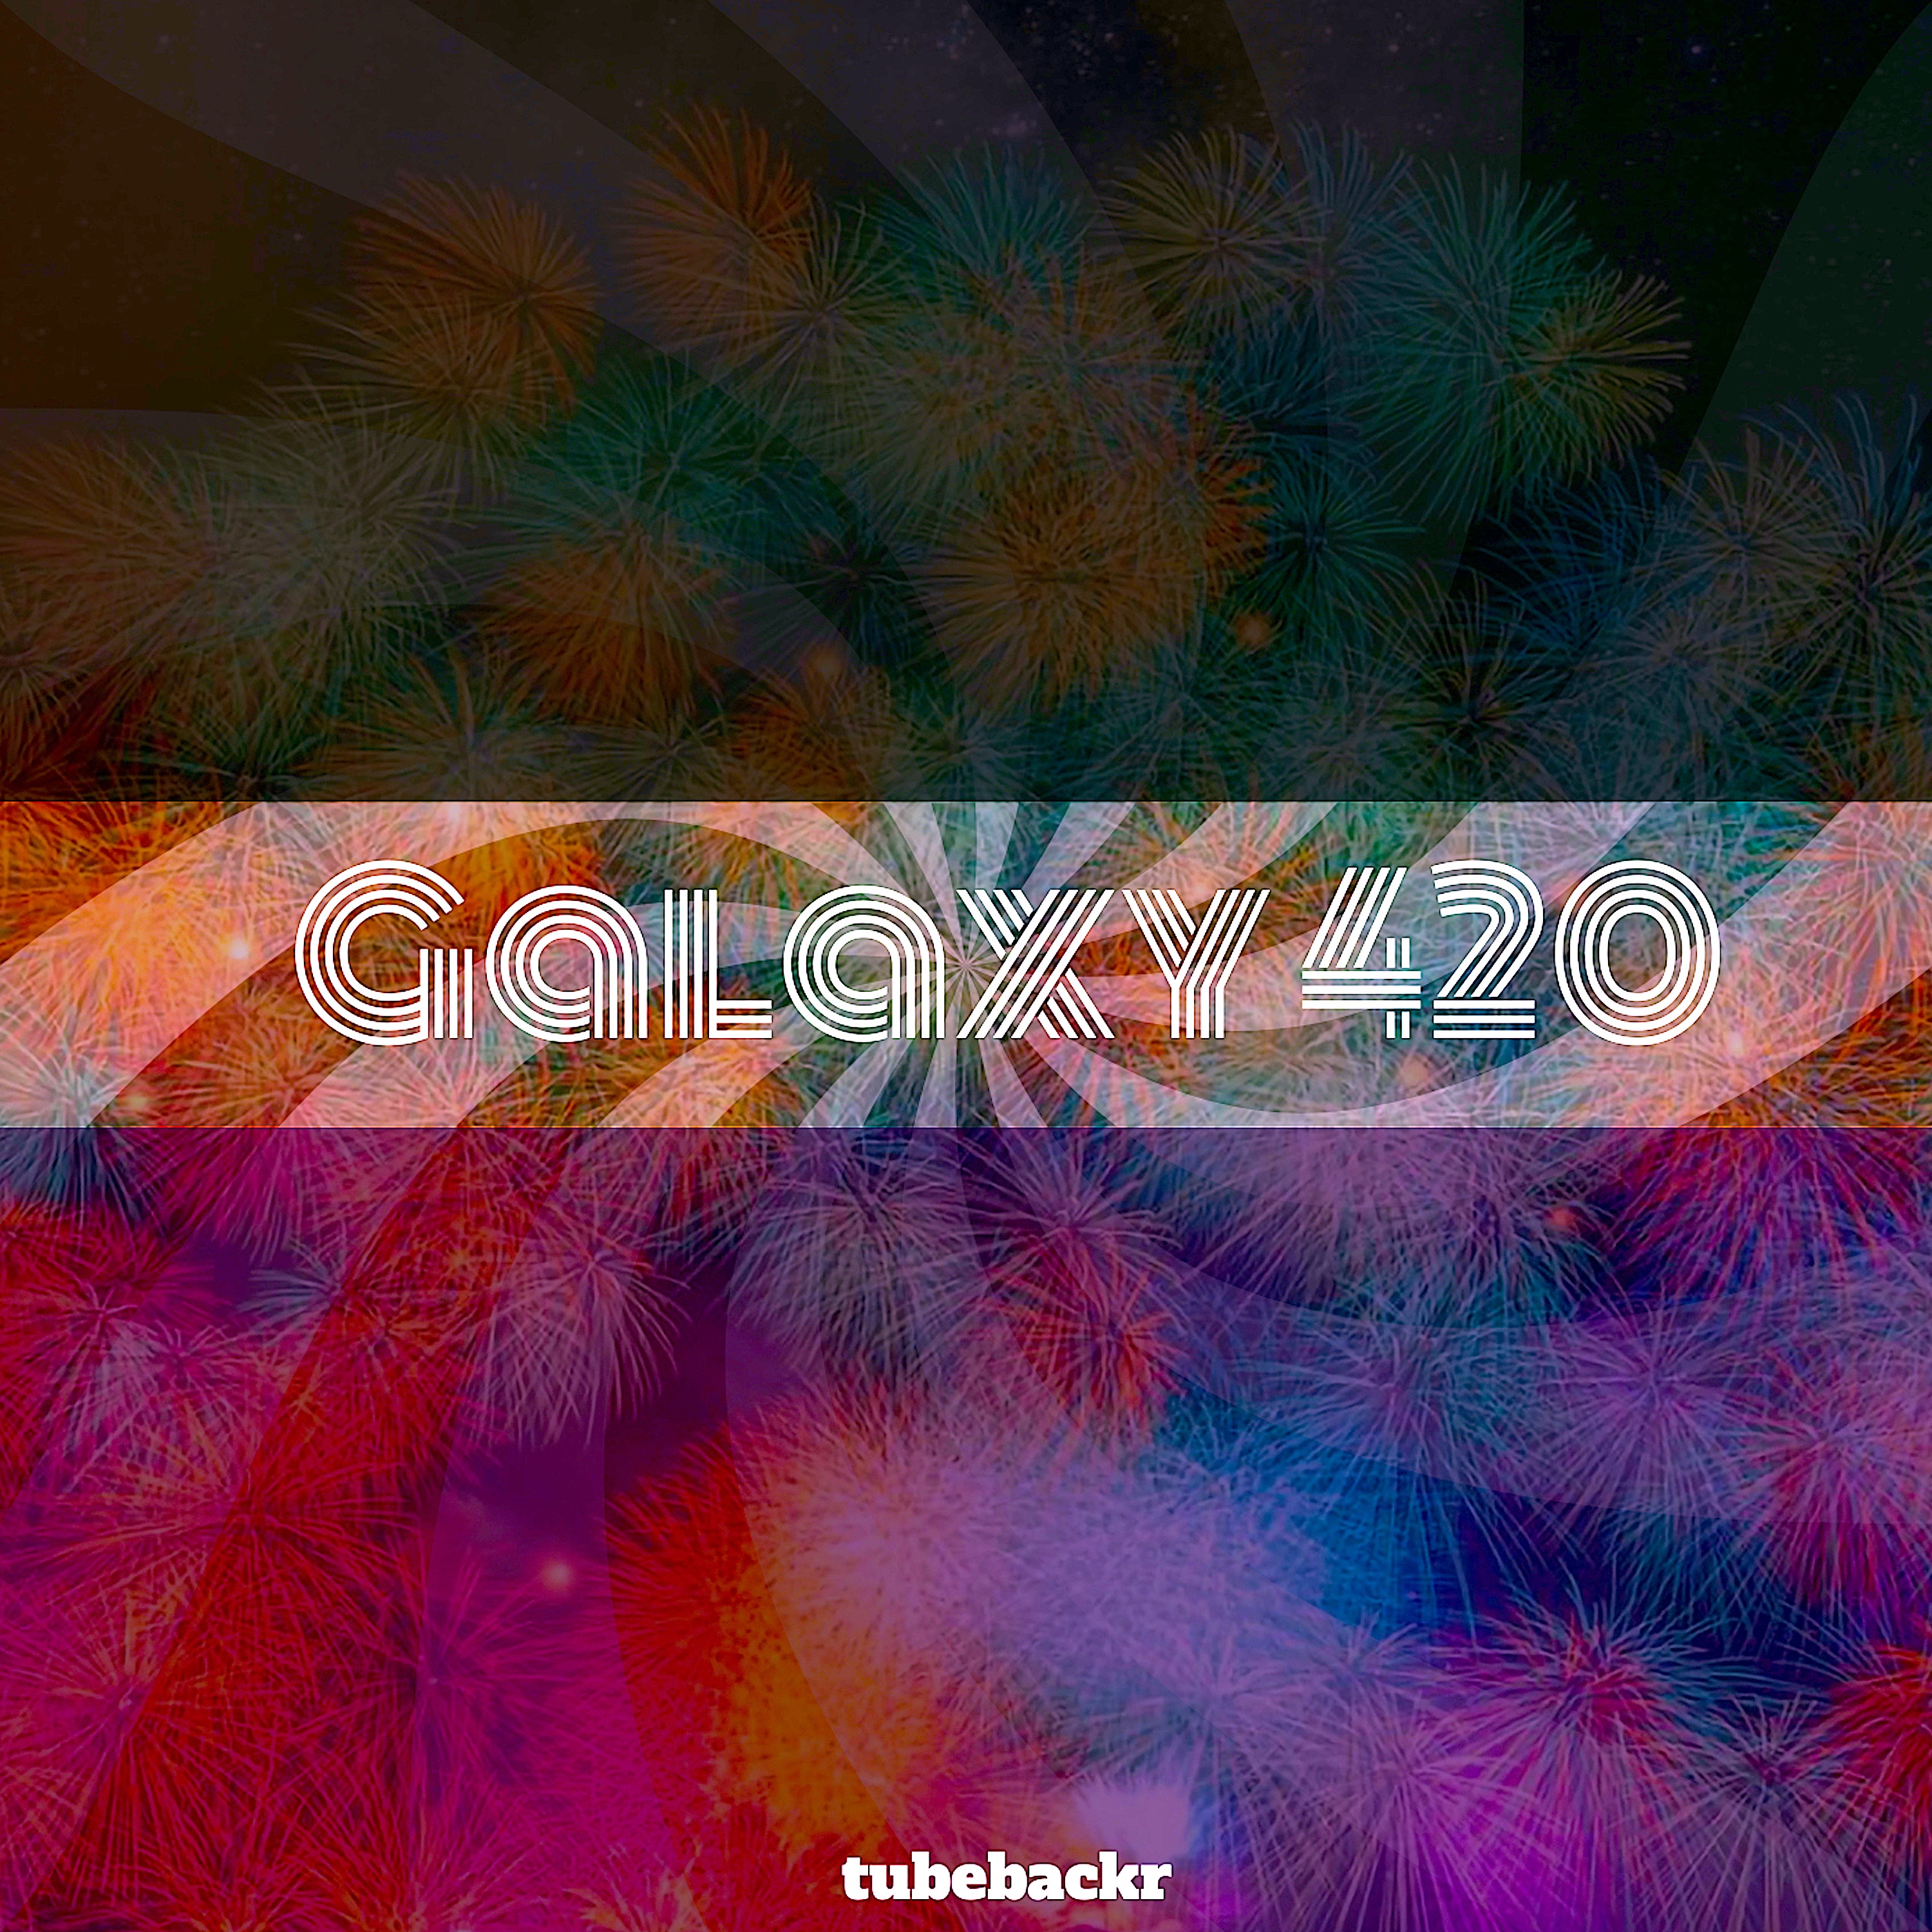 डाउनलोड करा Galaxy 420